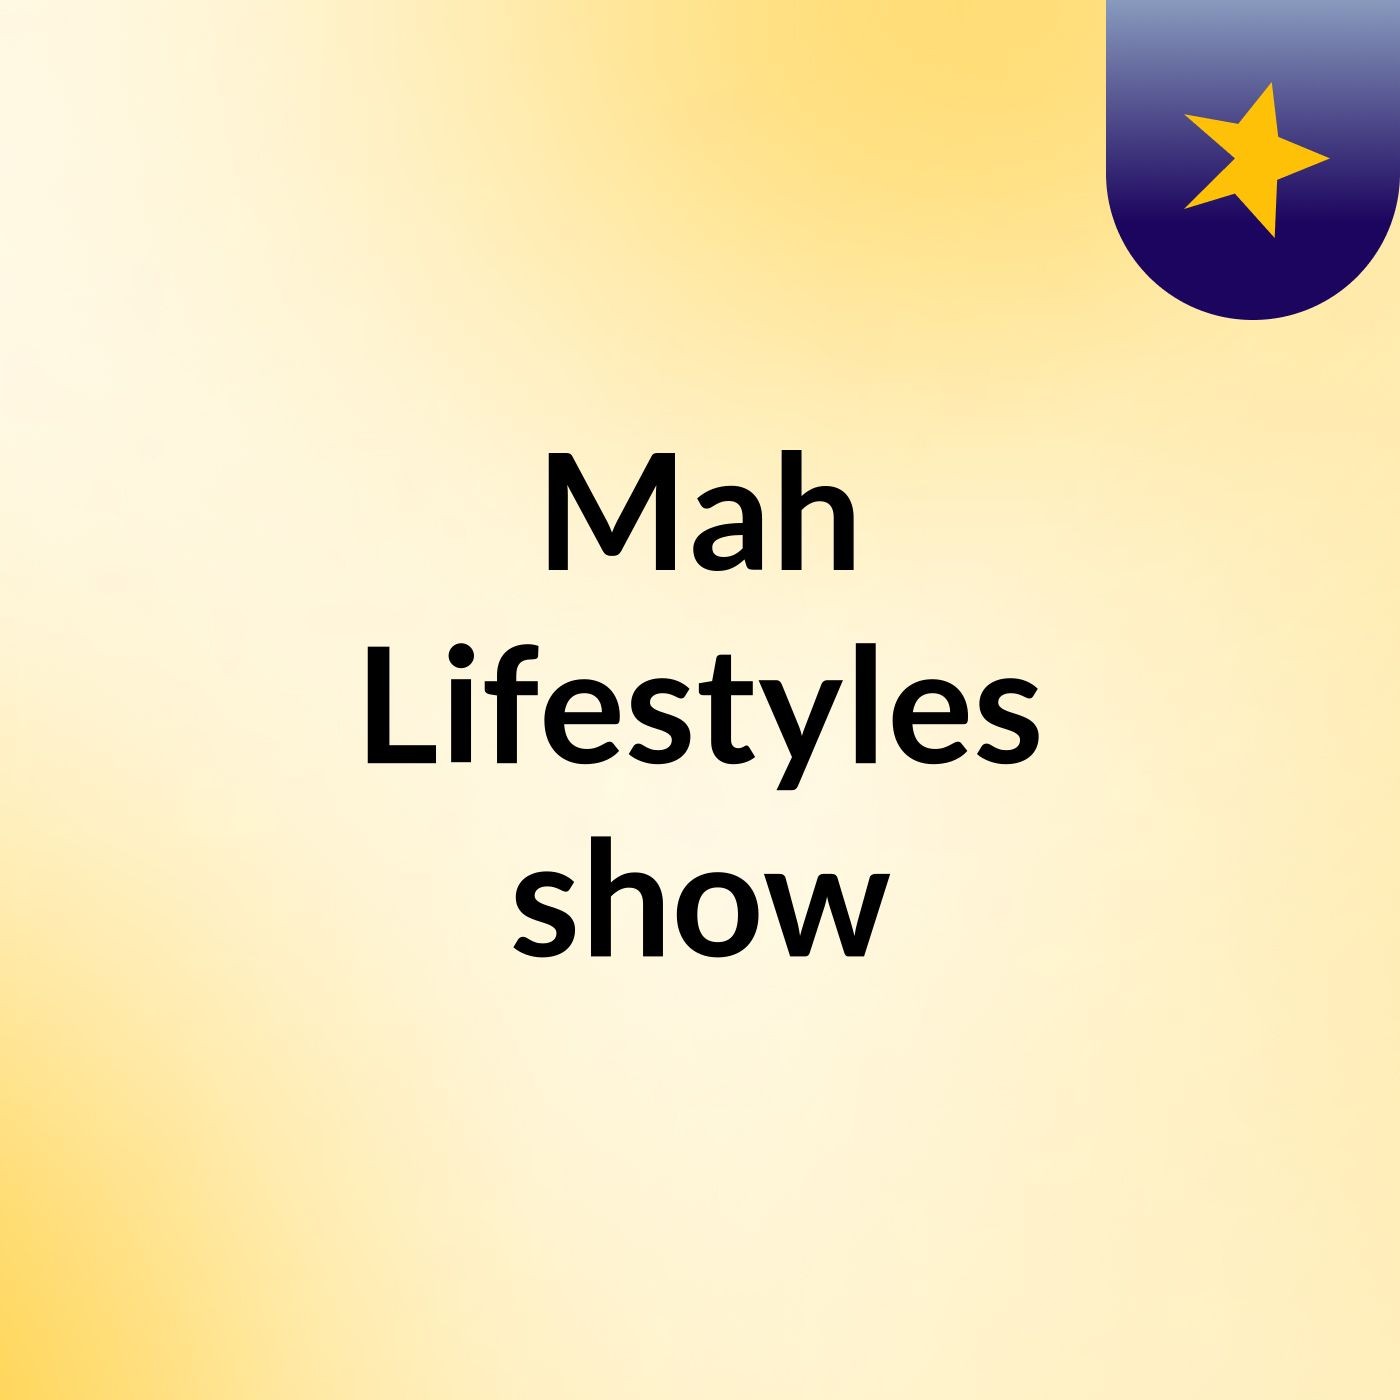 Mah Lifestyles show